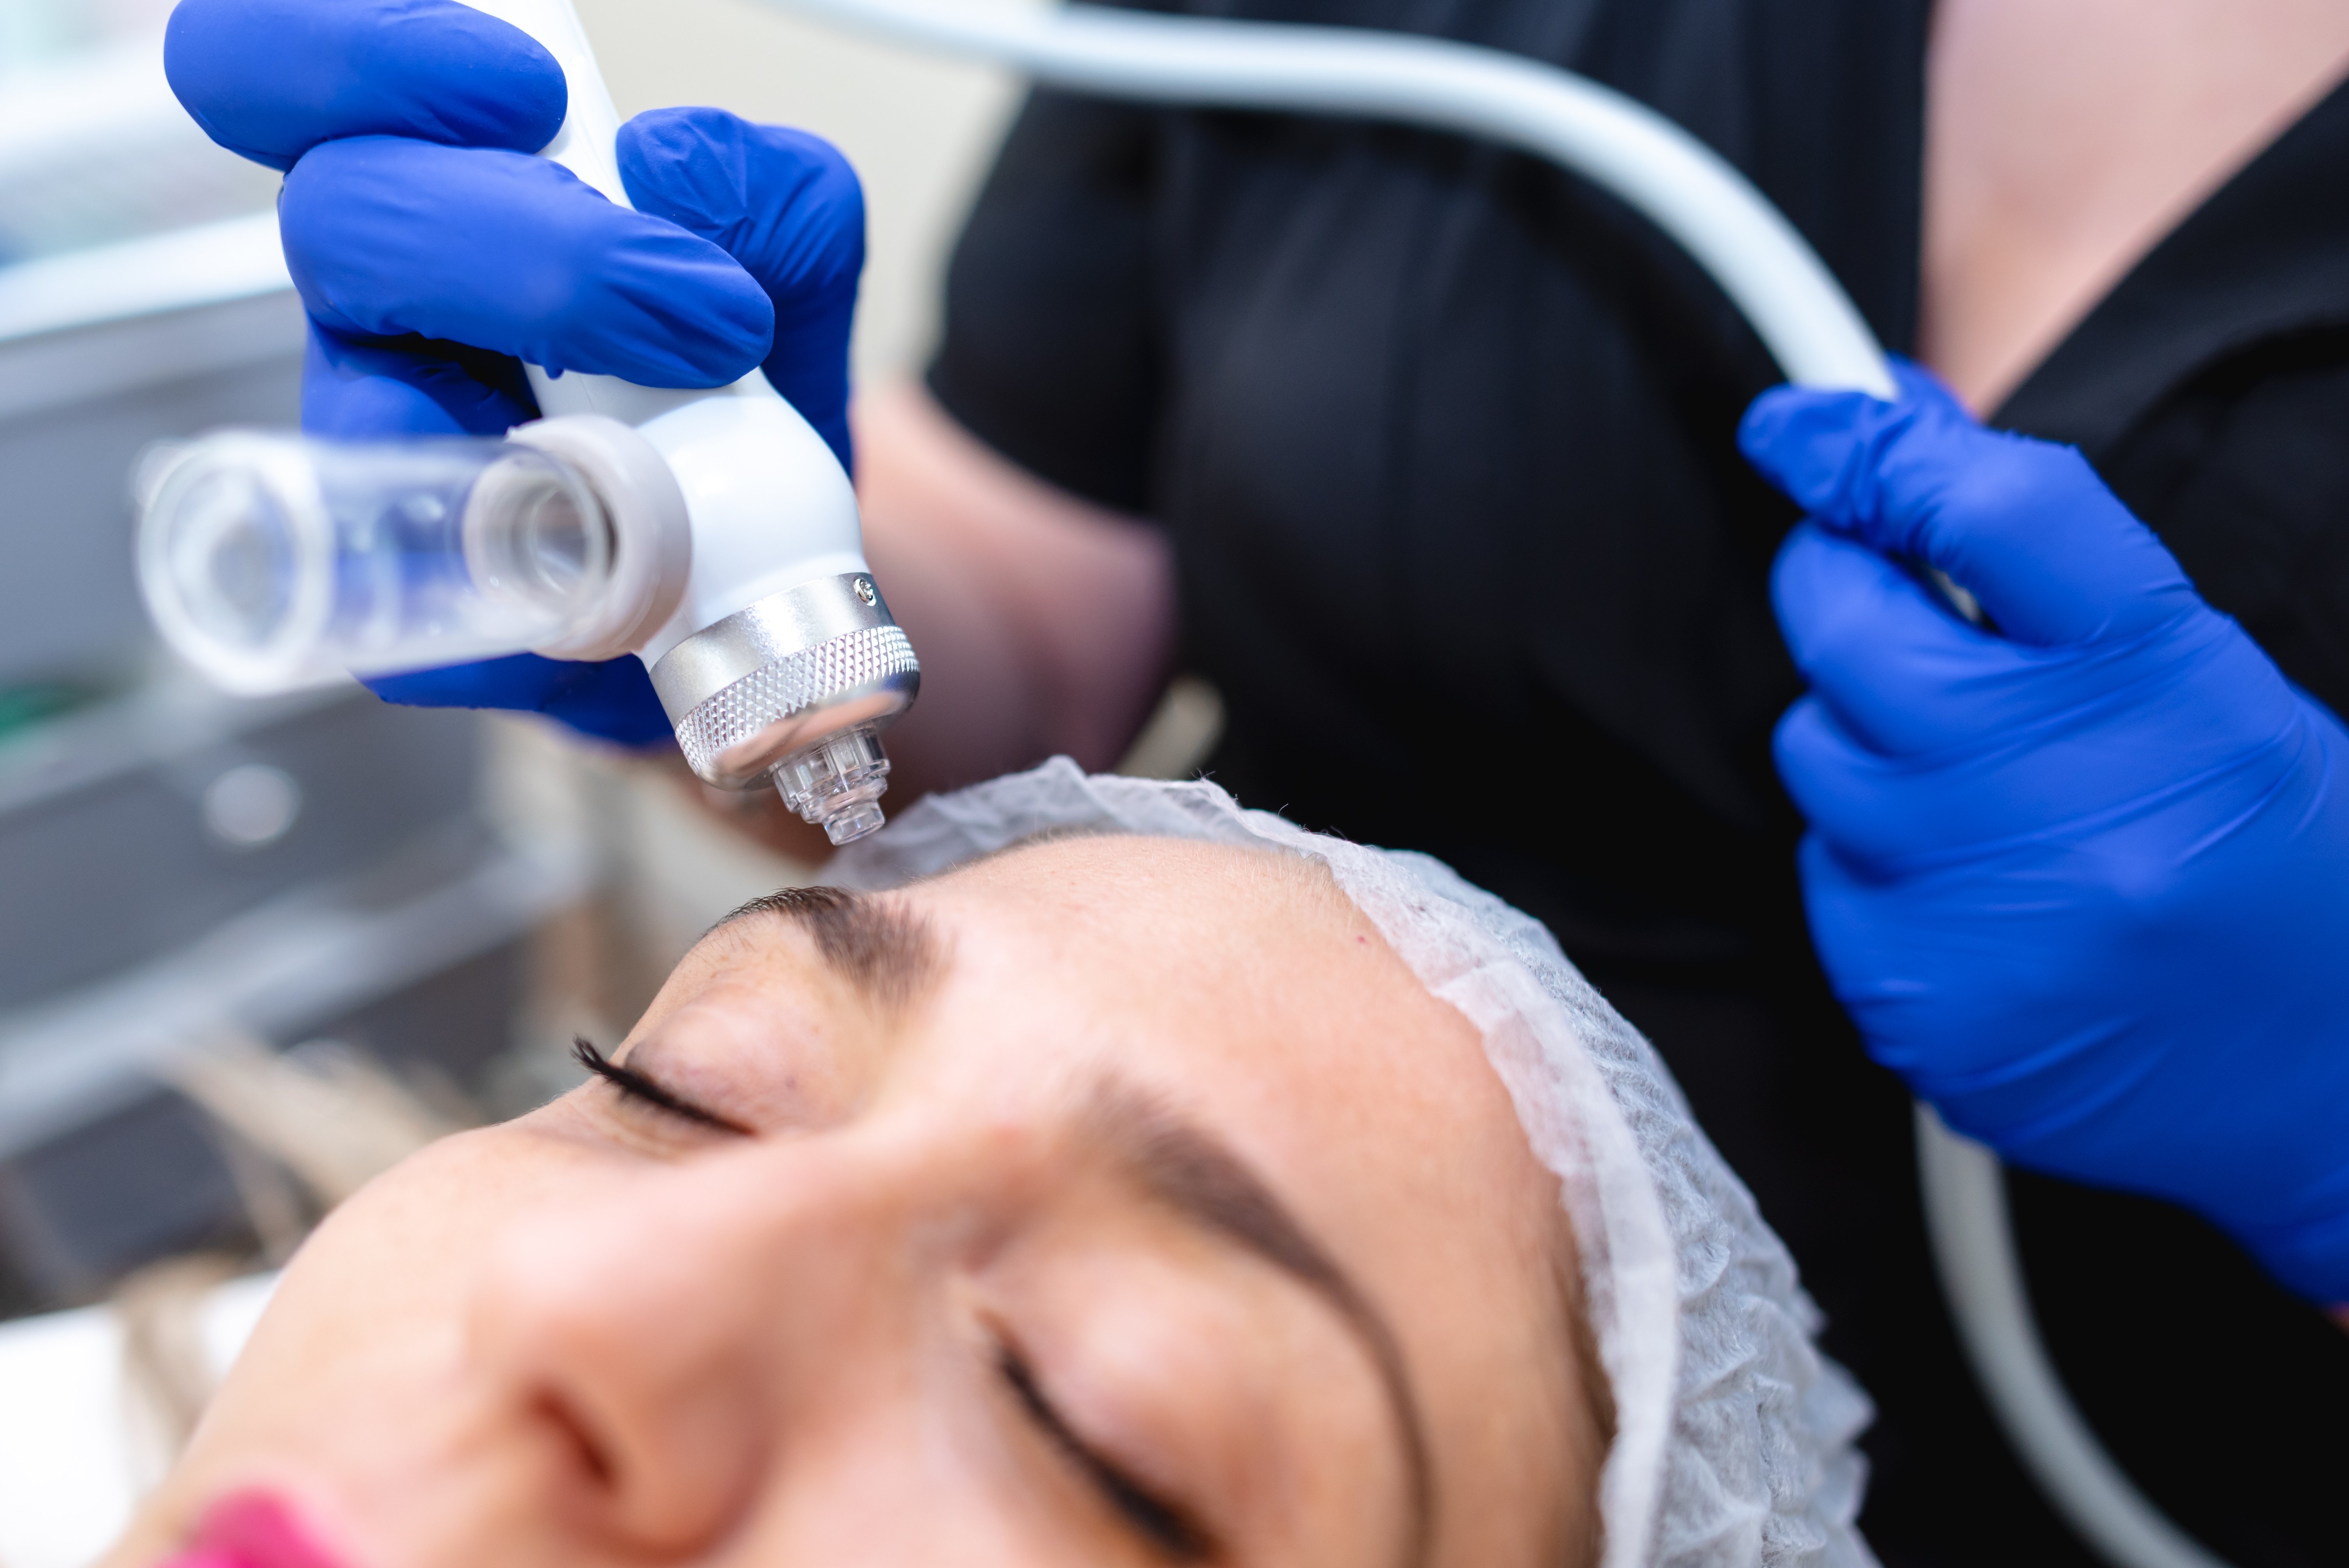 Woman undergoing microneedling procedure. | Source: Getty Images